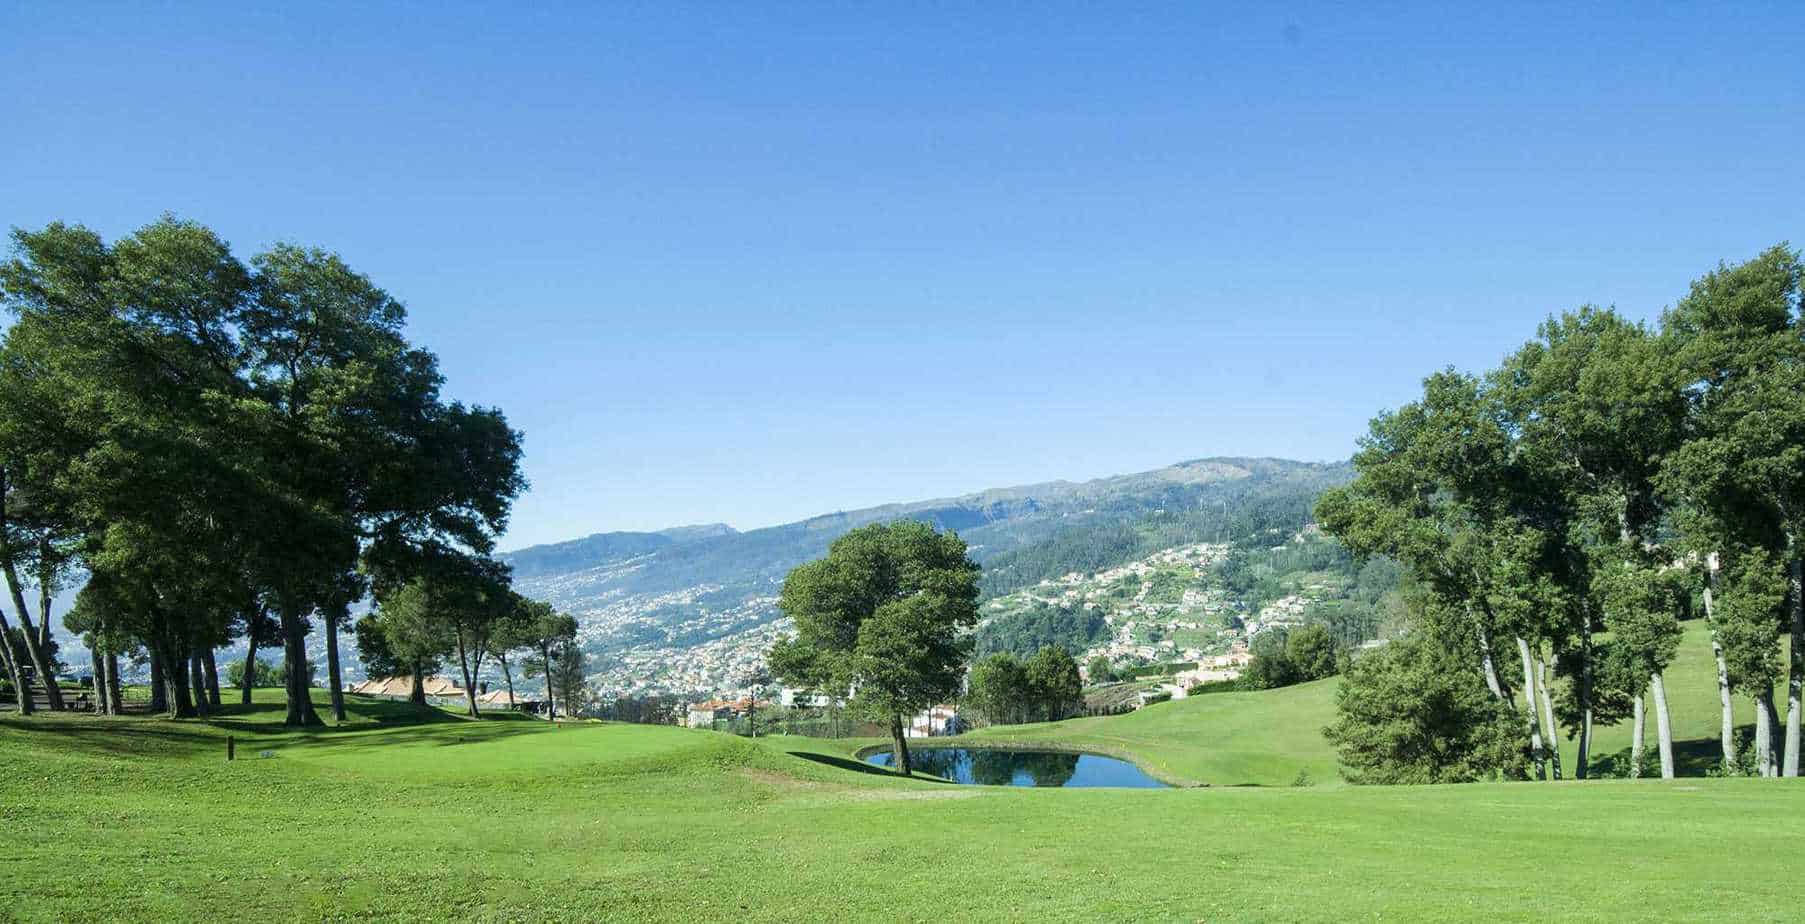 Golf course Palheiro in Funchal